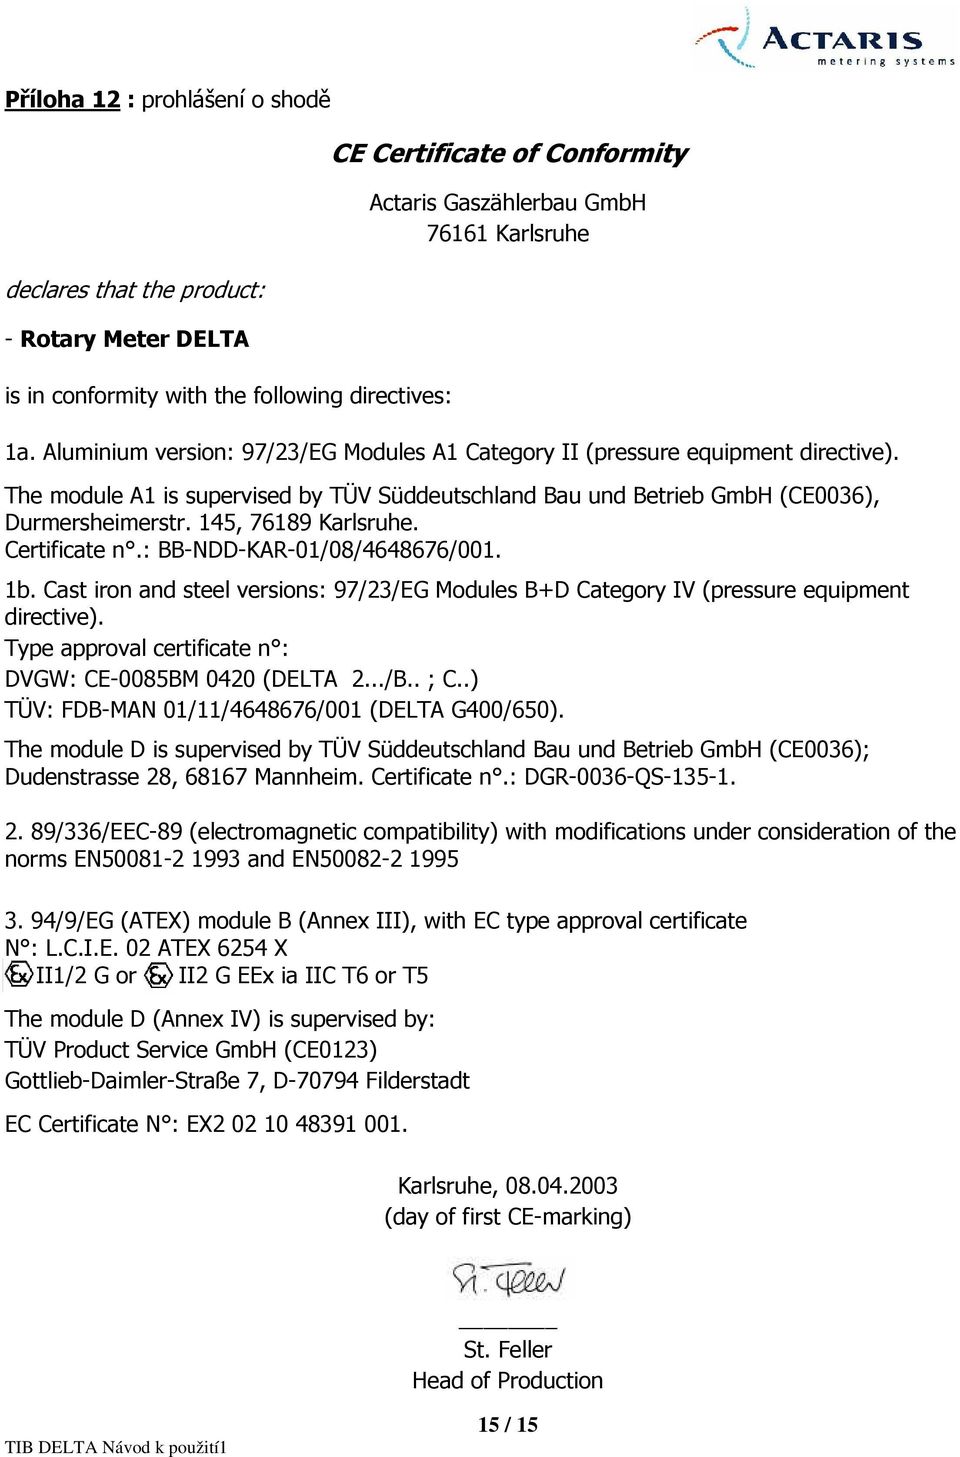 Certificate n.: BB-N-KAR-0/08/4648676/00. b. Cast iron and steel versions: 97/23/EG Modules B+ Category IV (pressure equipment directive). Type approval certificate n : VGW: CE-0085BM 0420 (ELTA 2.../B.